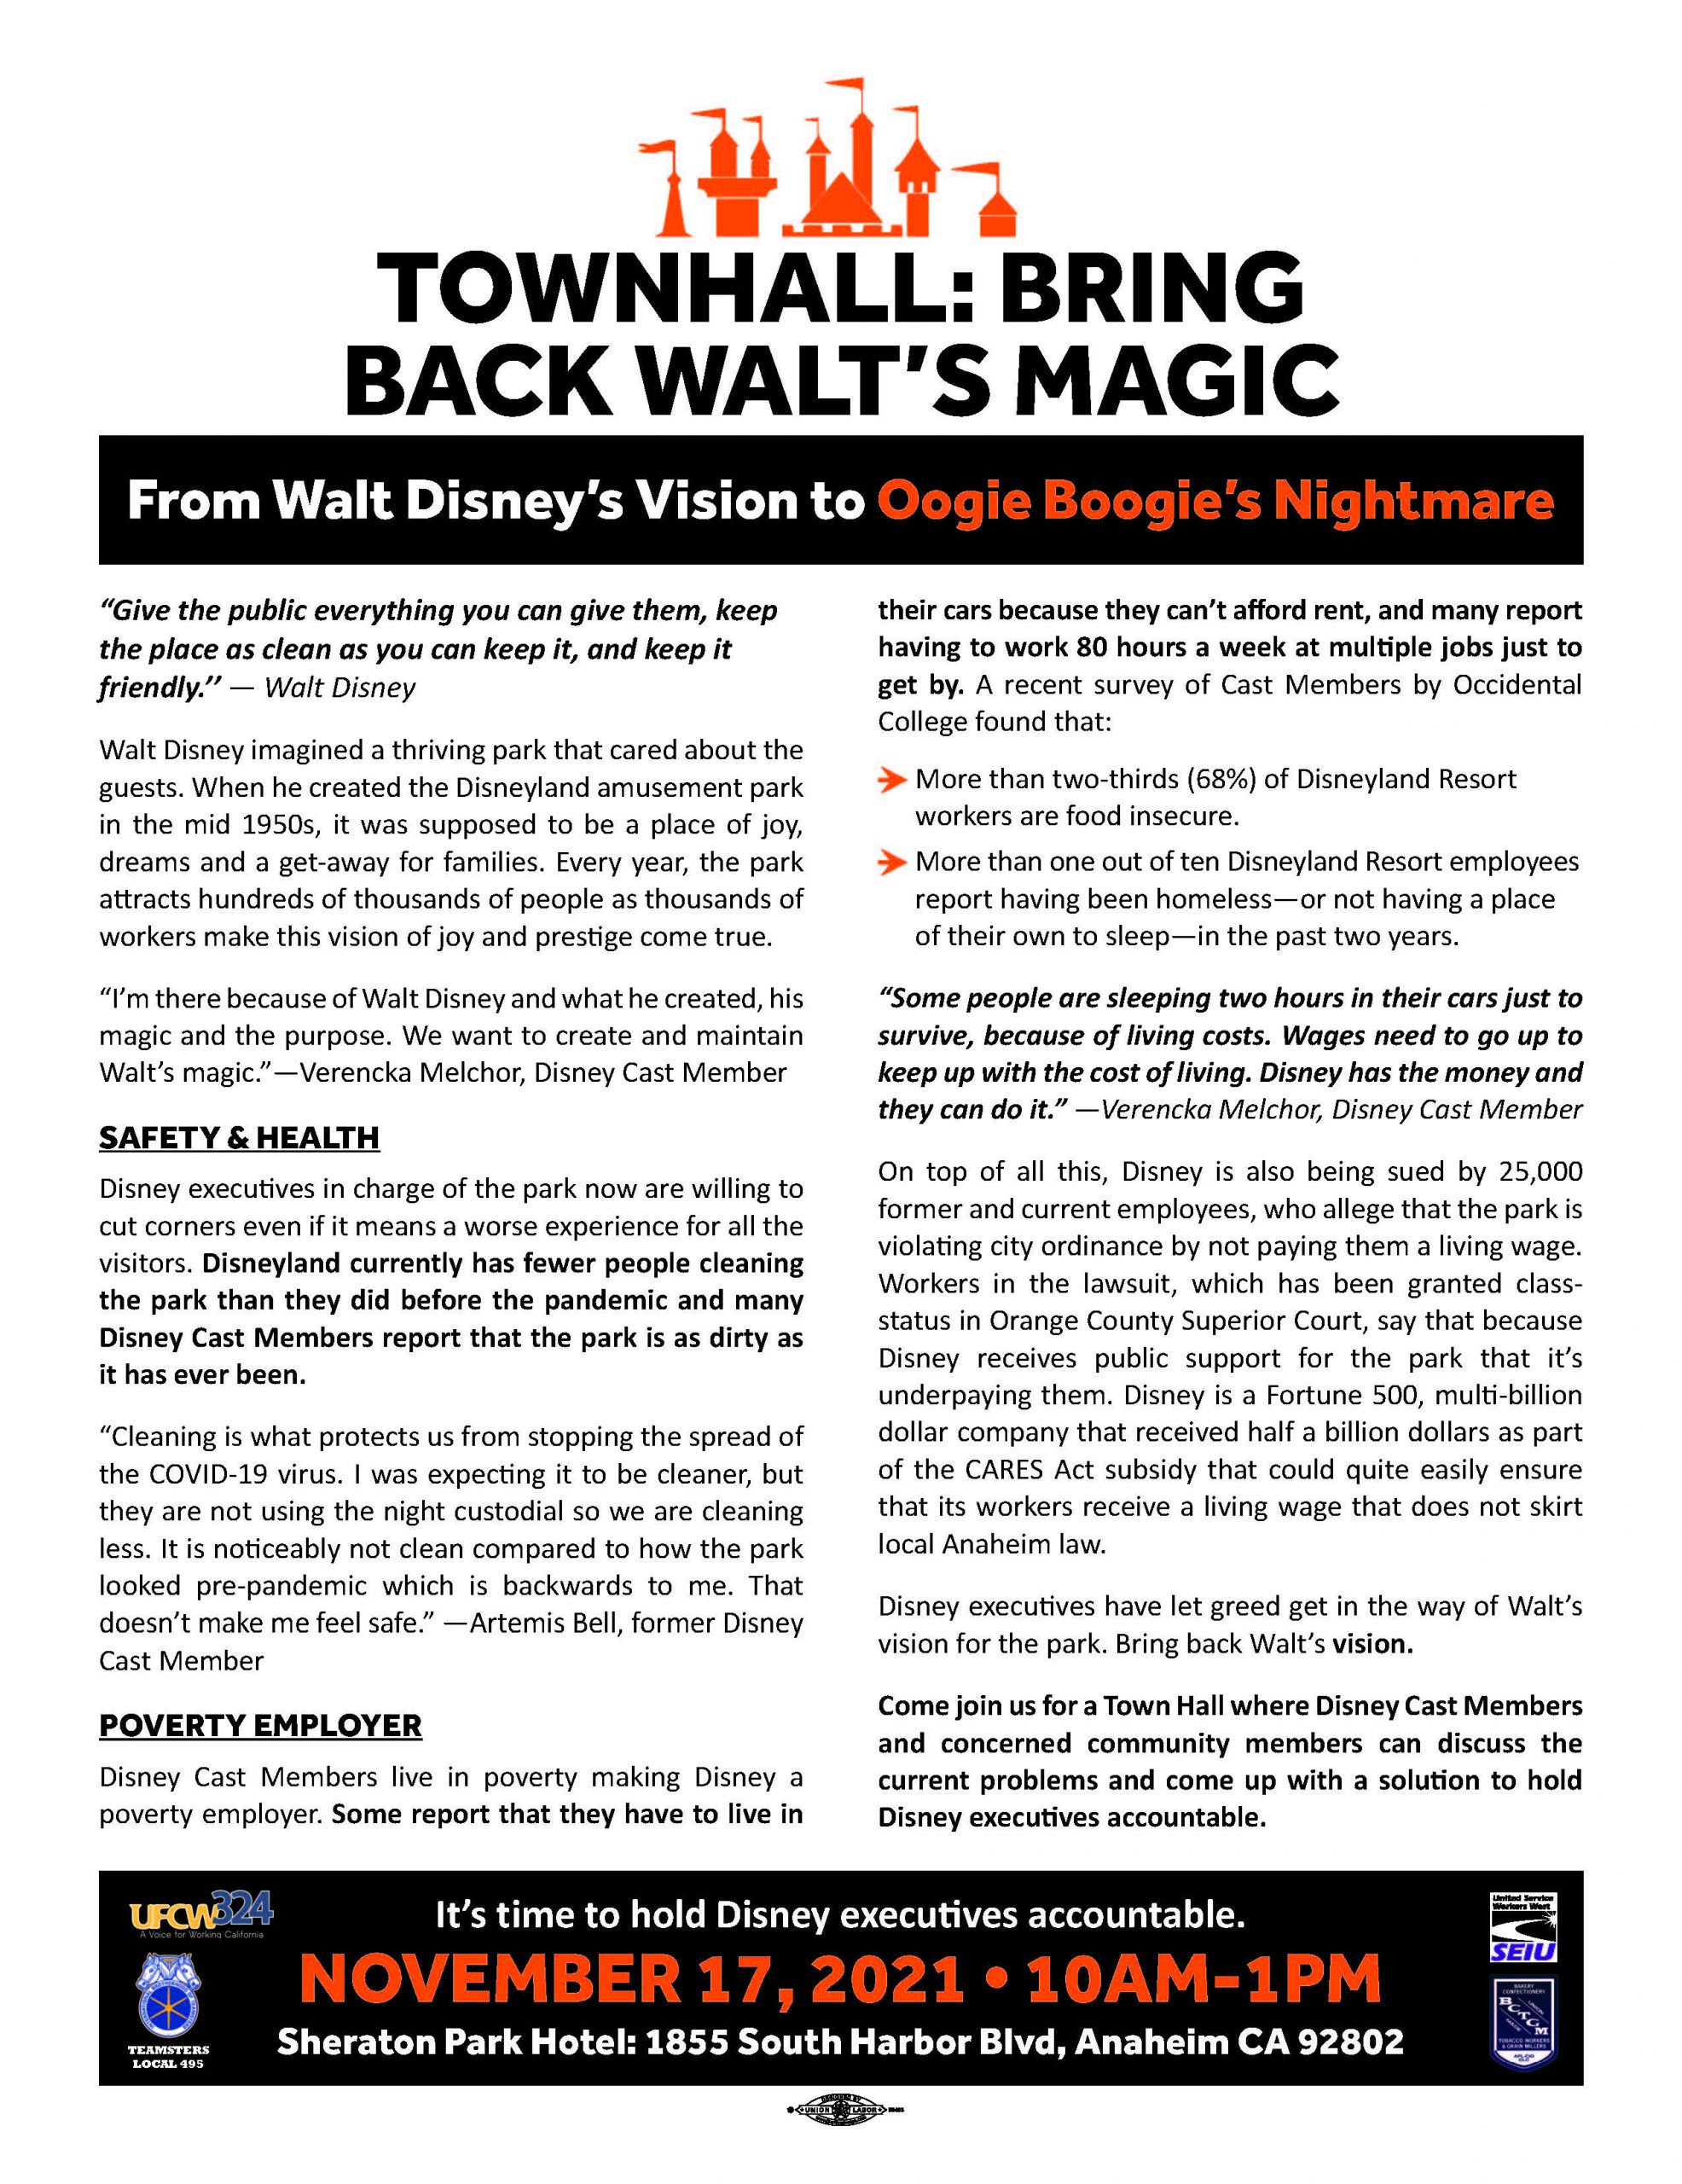 Townhall: Bring Back Walt’s Magic